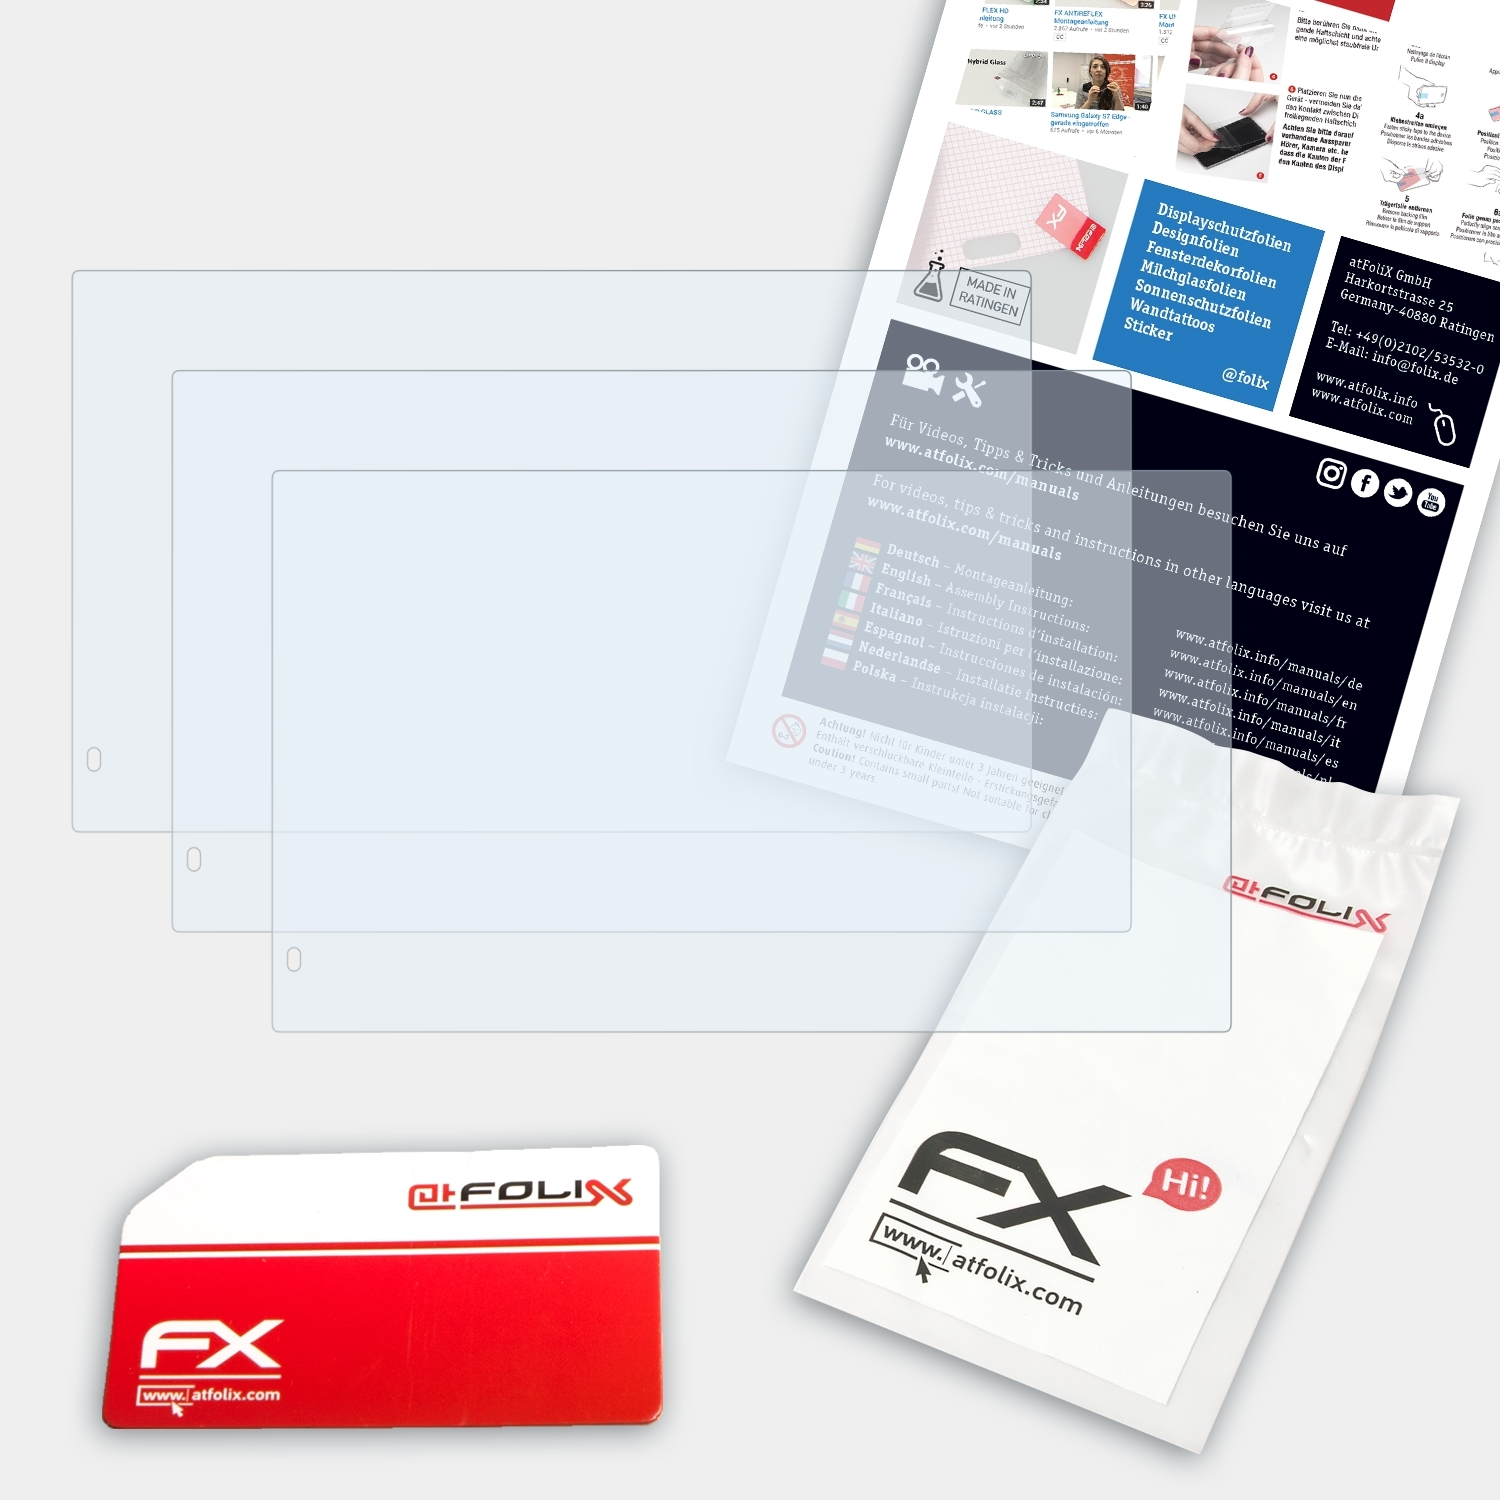 3x FX-Clear DriveSmart Displayschutz(für 70LMT-D) ATFOLIX Garmin